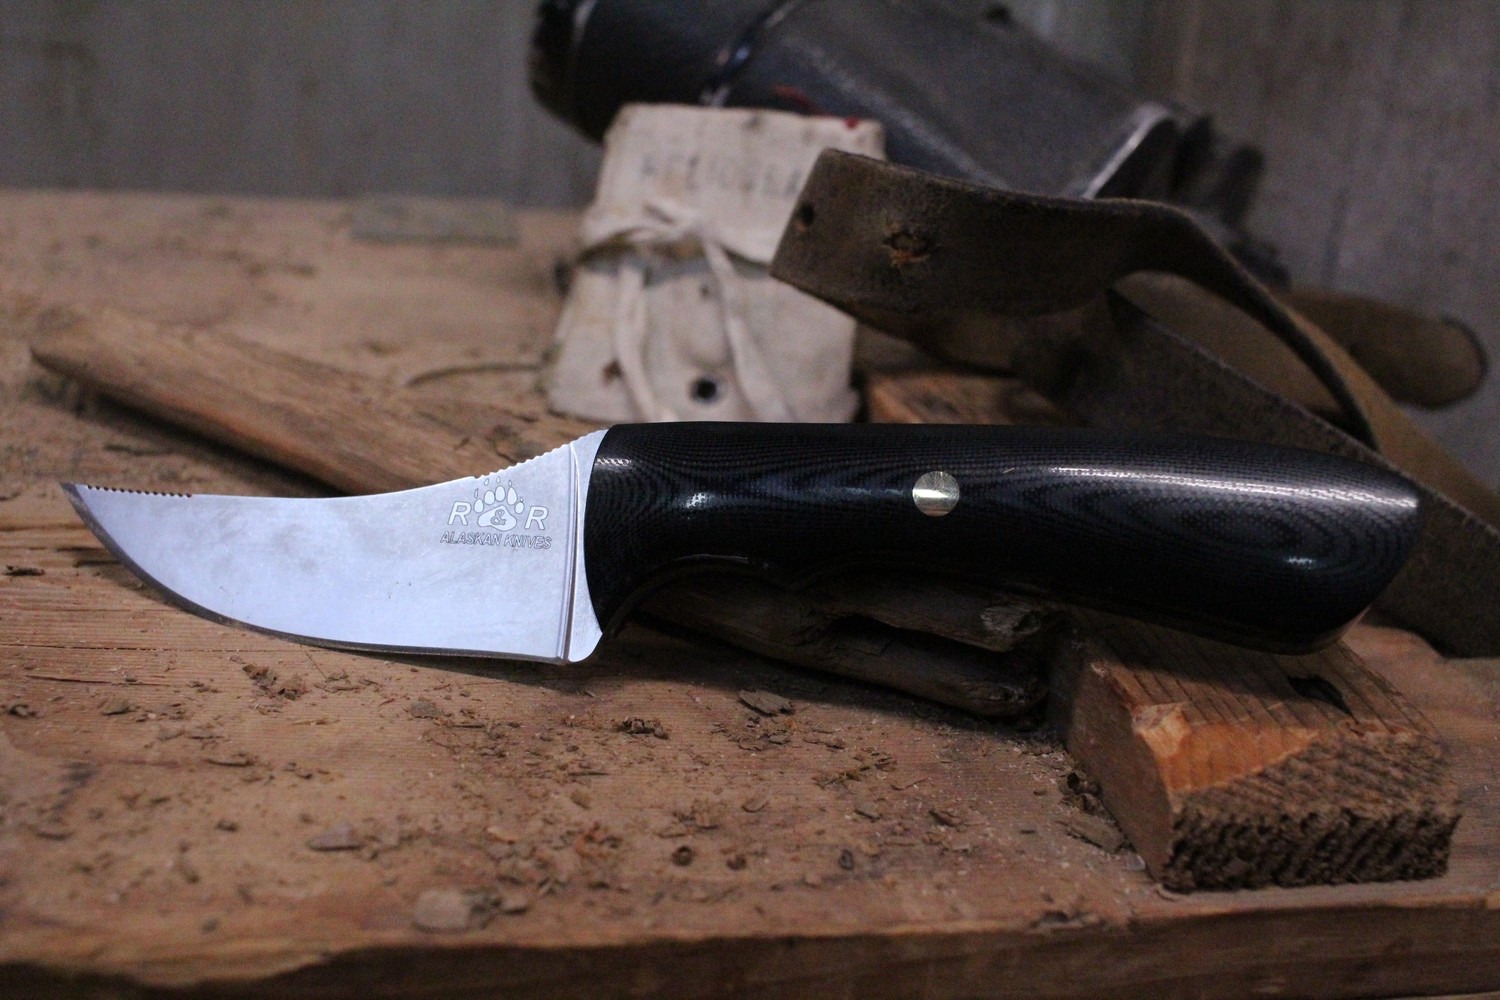 R&R Alaska Trailing Point 3.5" Fixed Blade Knife, Black Micarta / Satin CPM-S30V